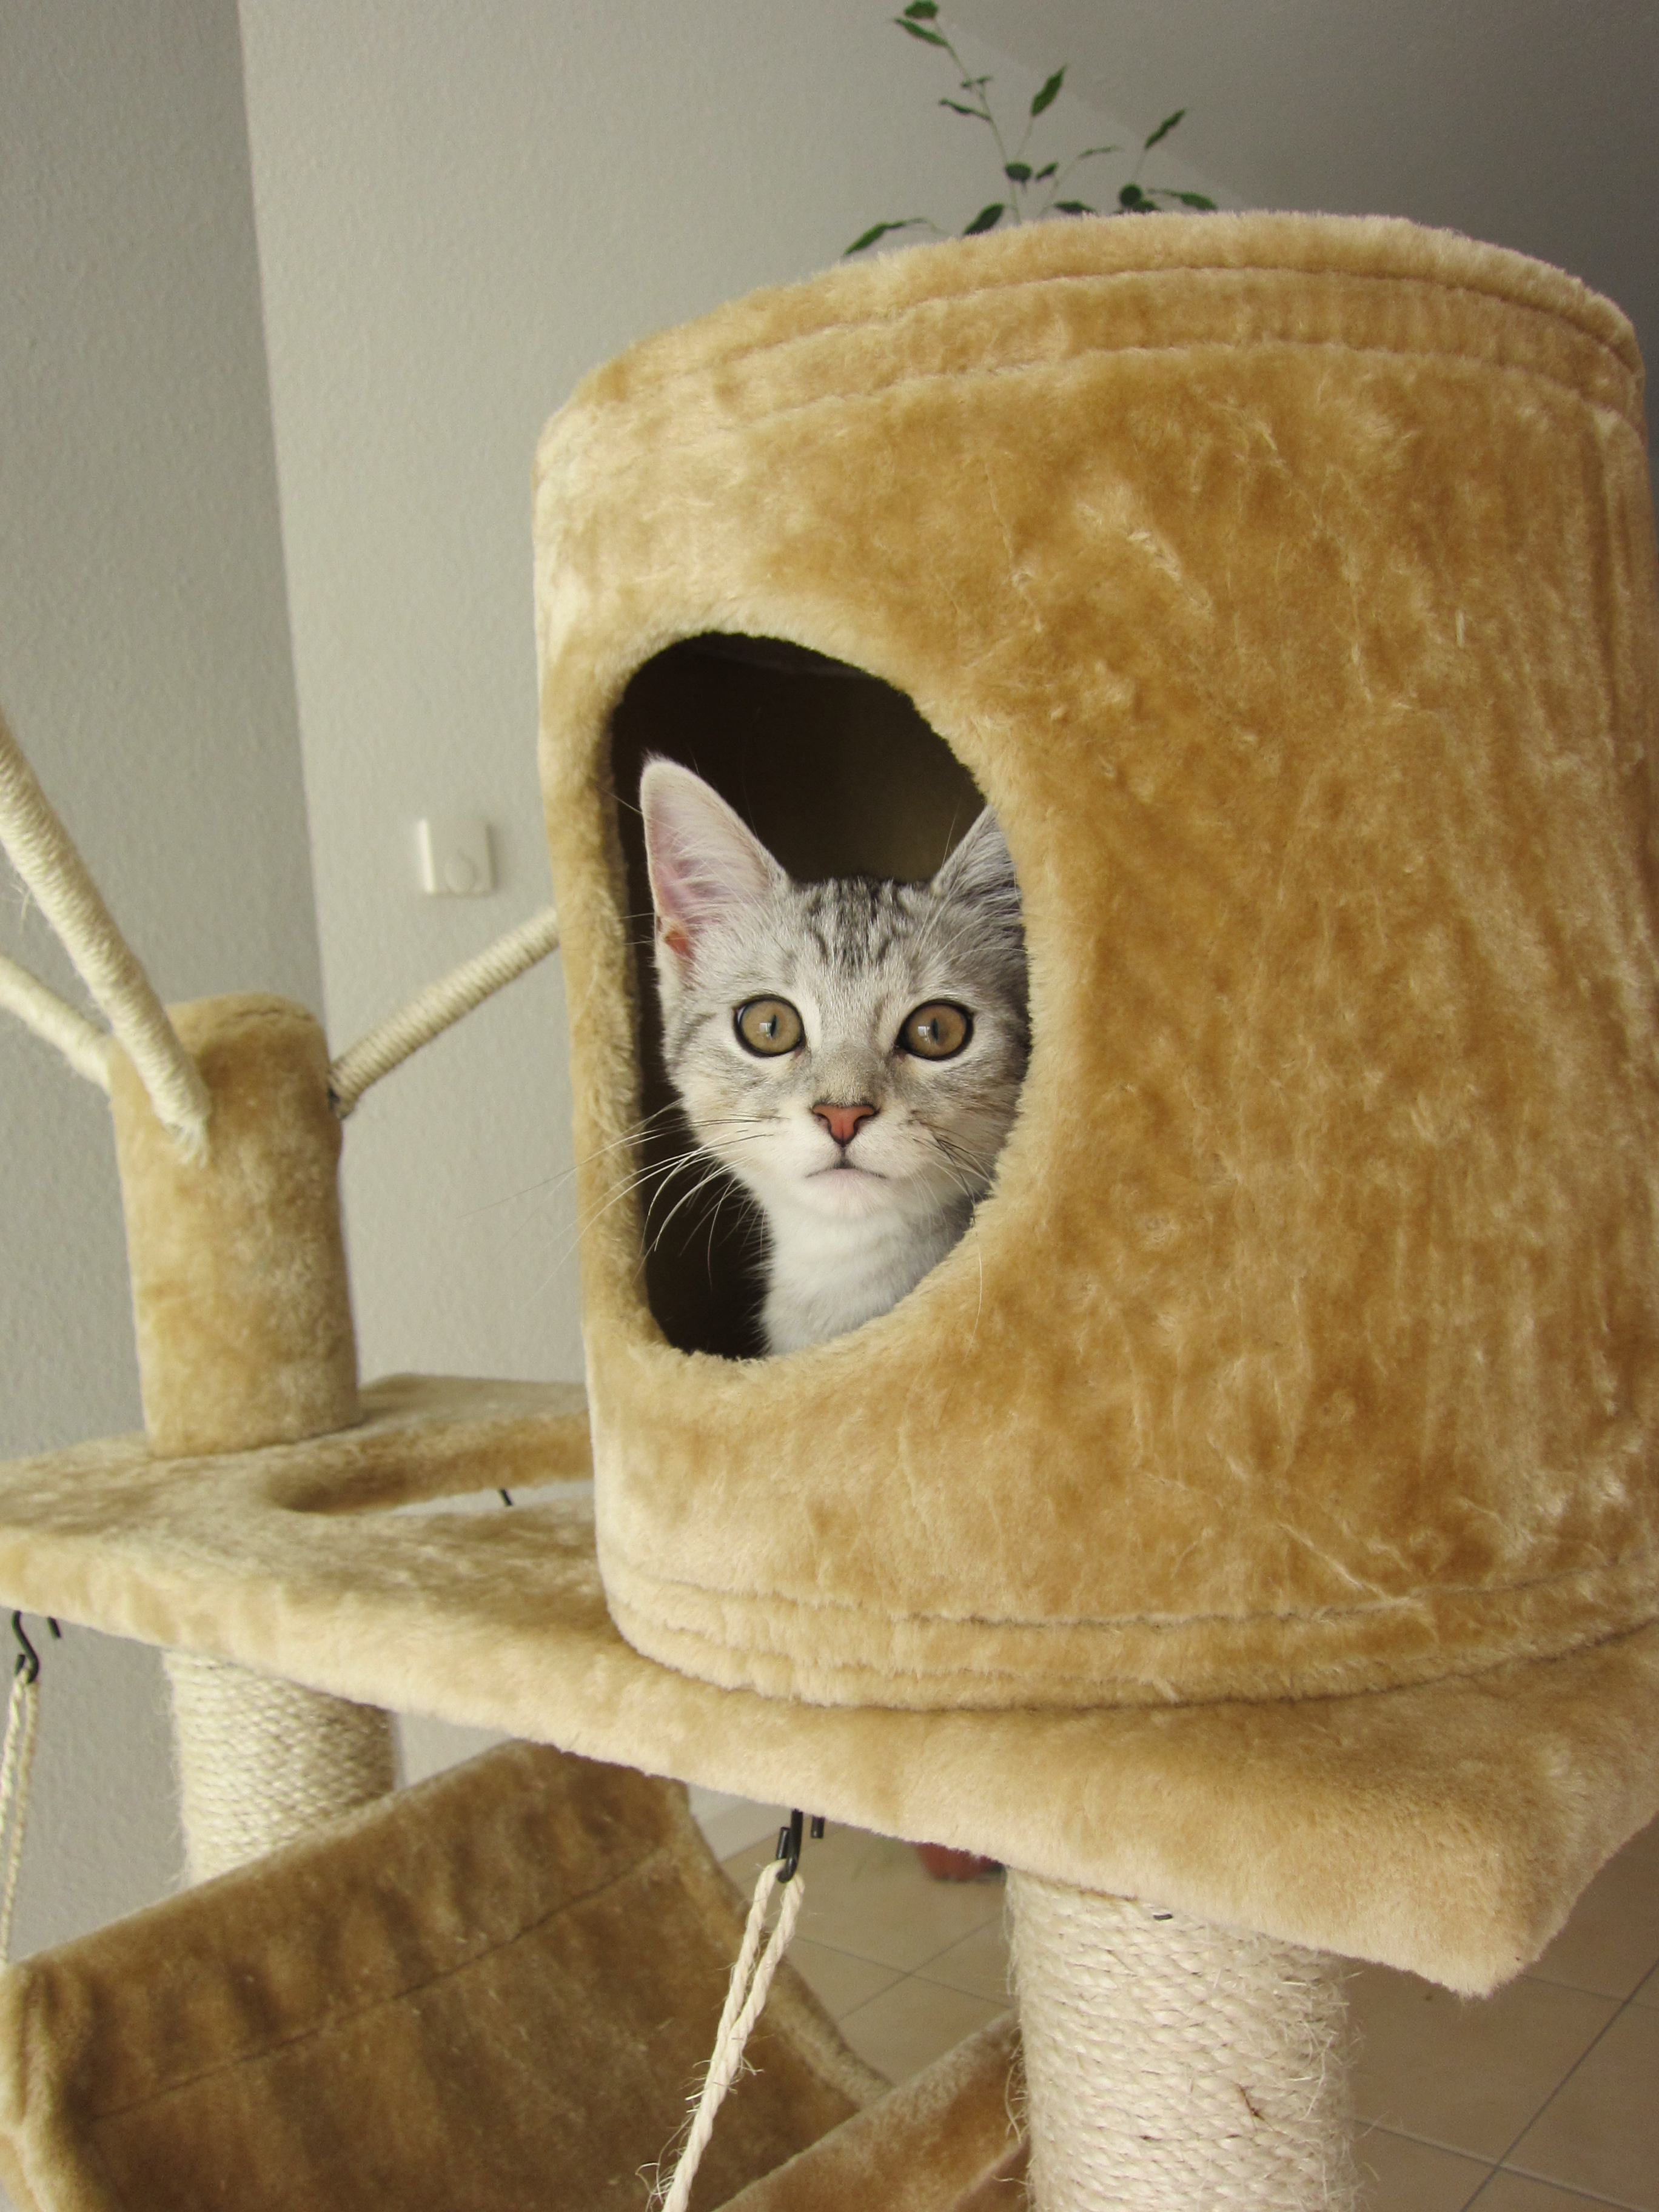 Cat muska in her cat tree box.